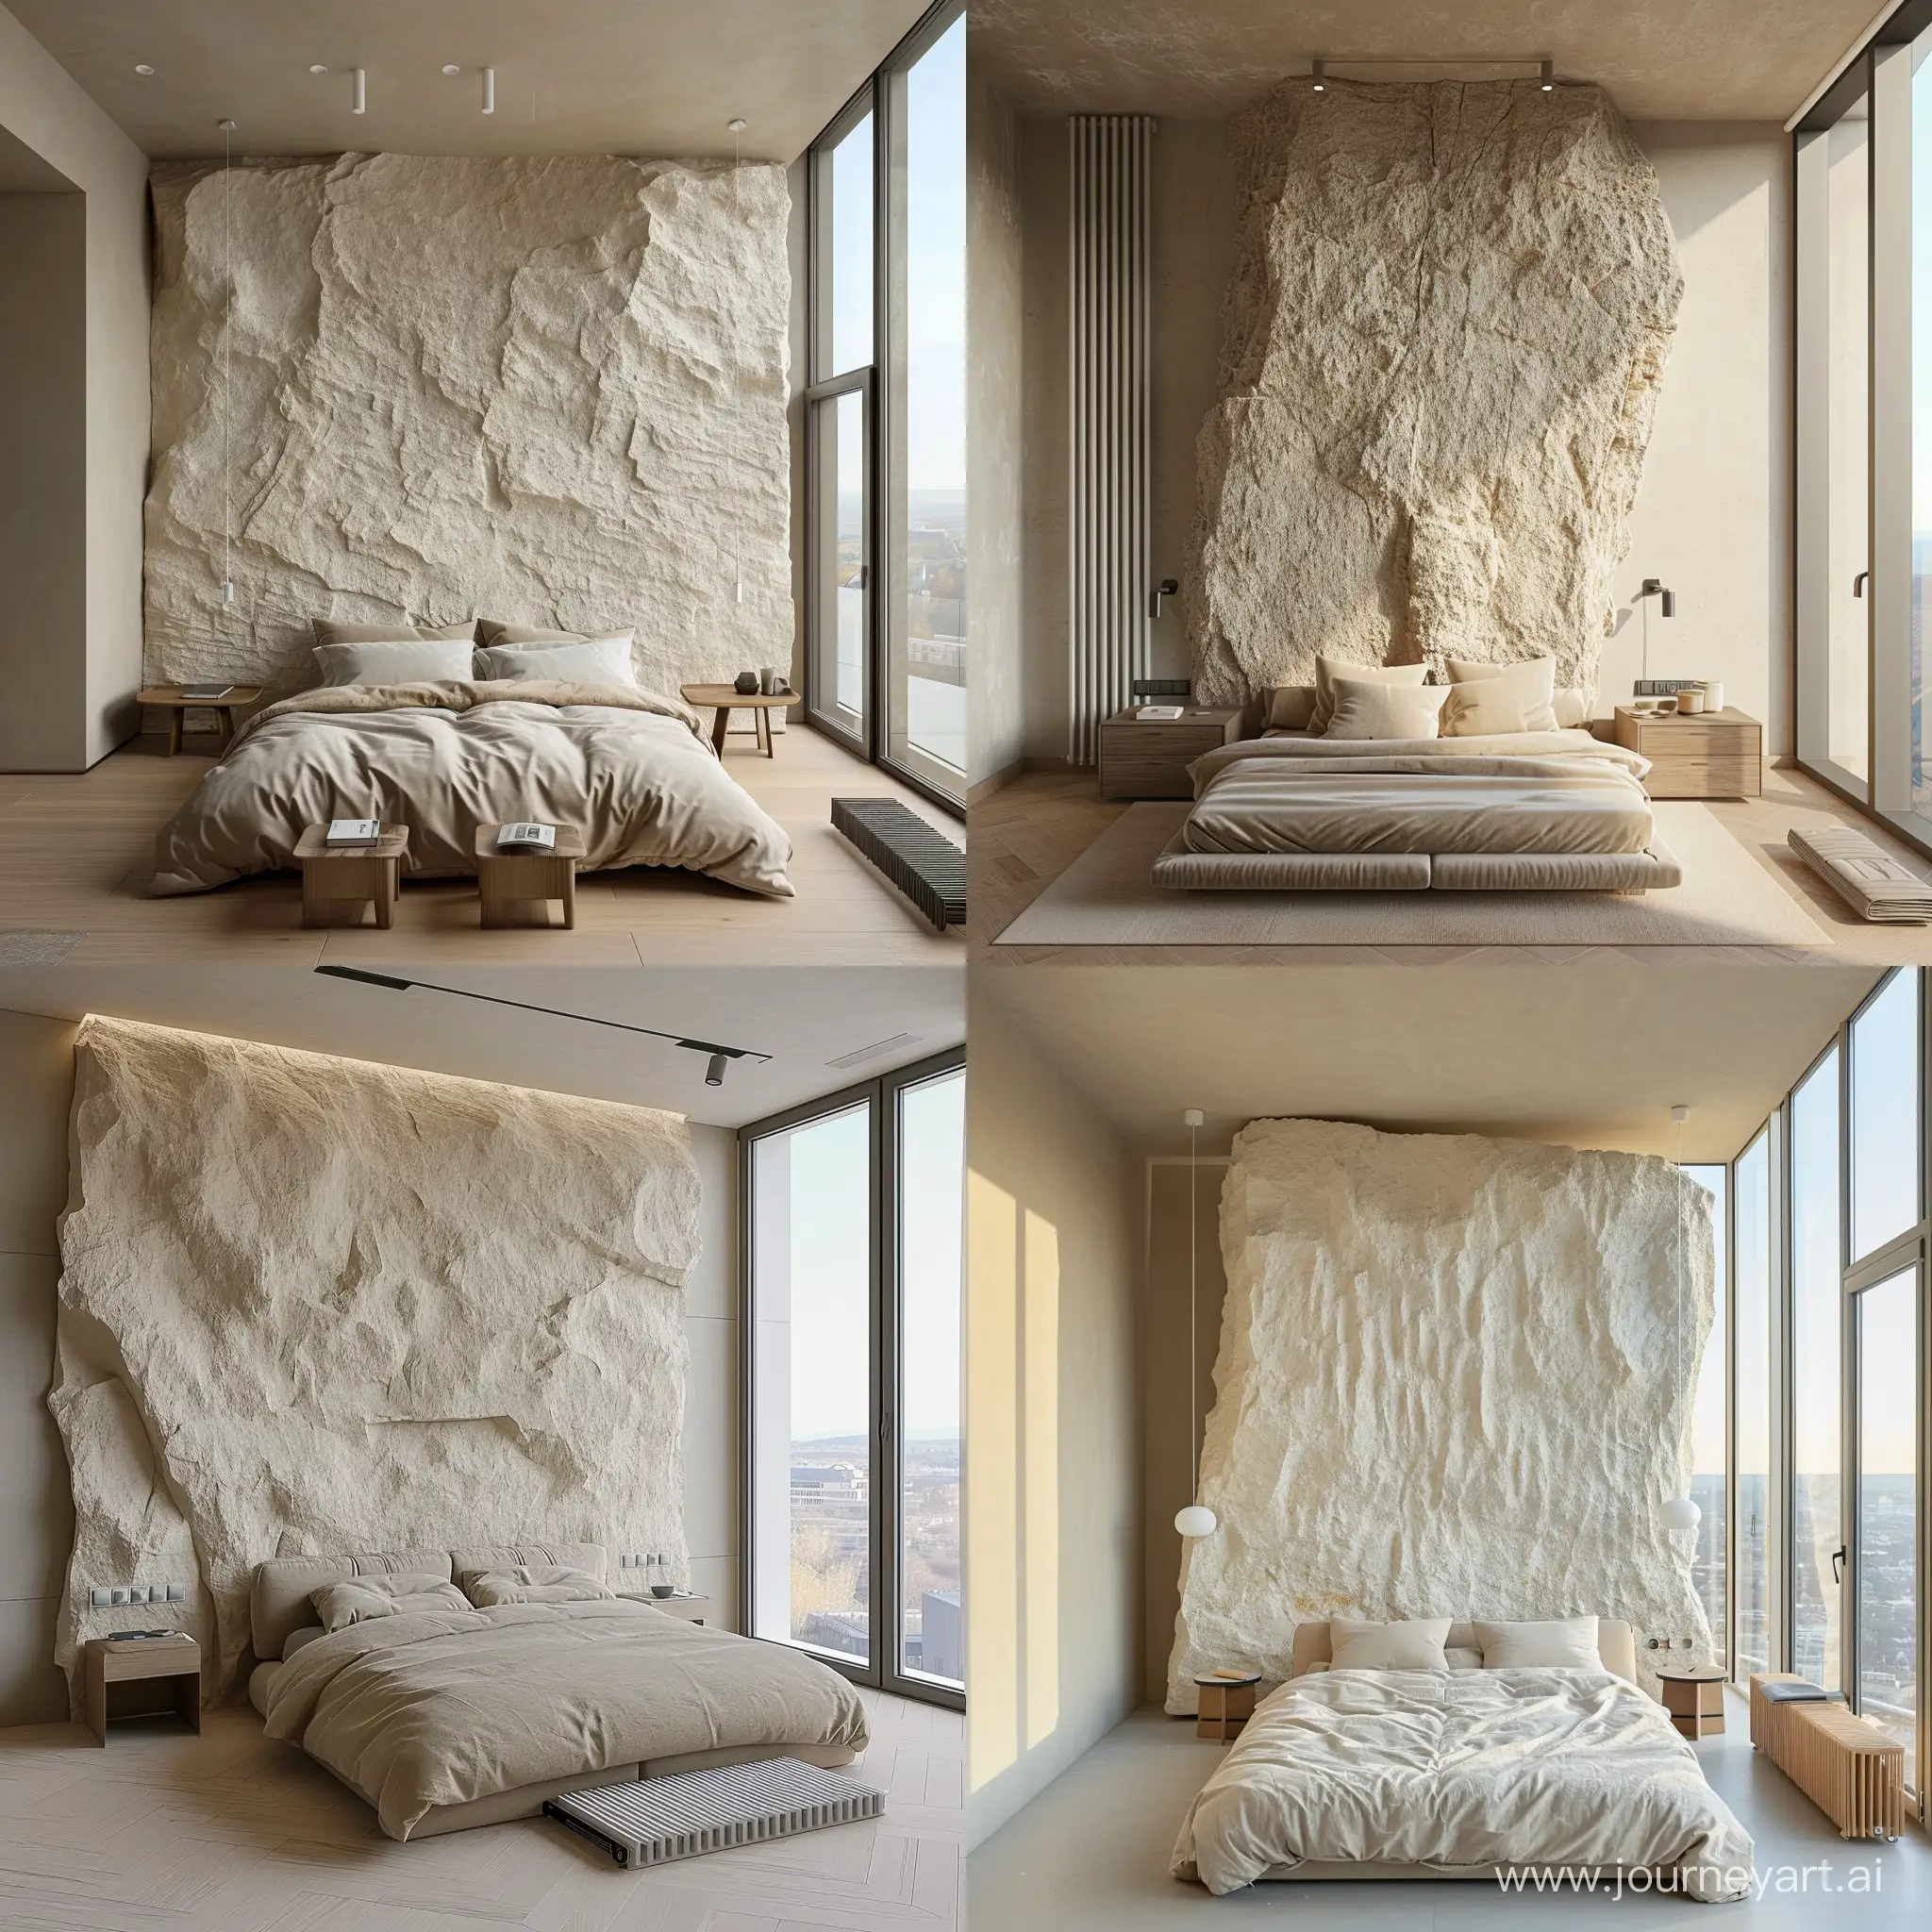 Minimalist-Bedroom-with-LightColored-Rock-Wall-and-FloortoCeiling-Windows